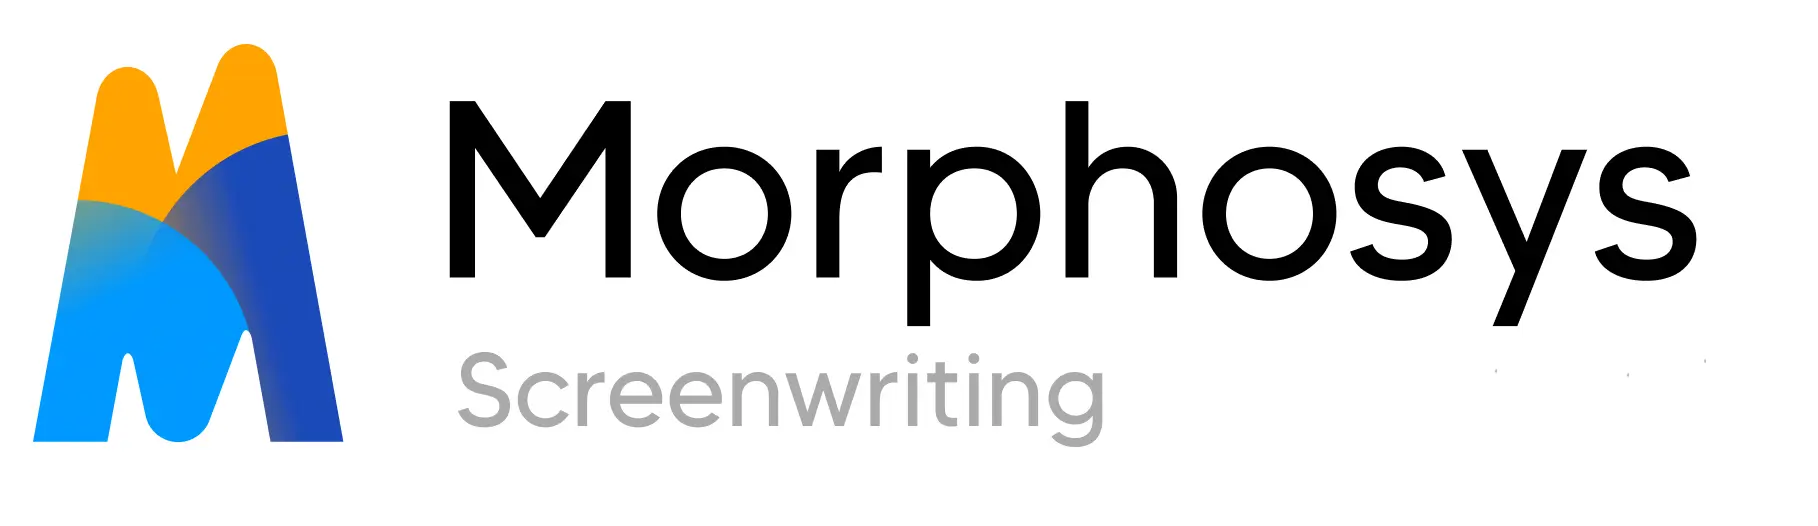 Morphosys Screenwriting Logo